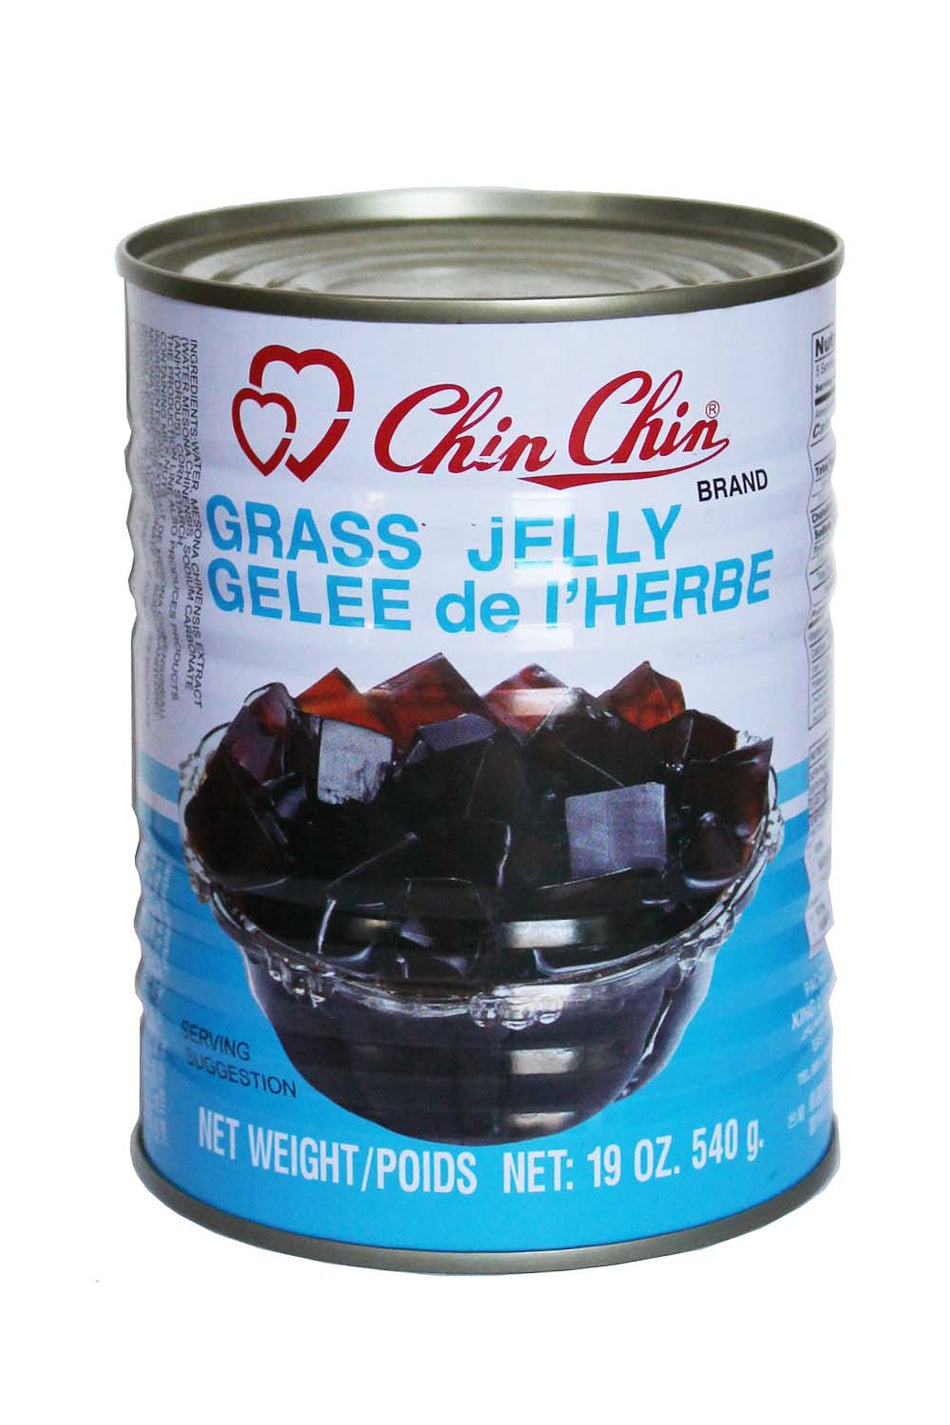 Chin Chin Grass Jelly